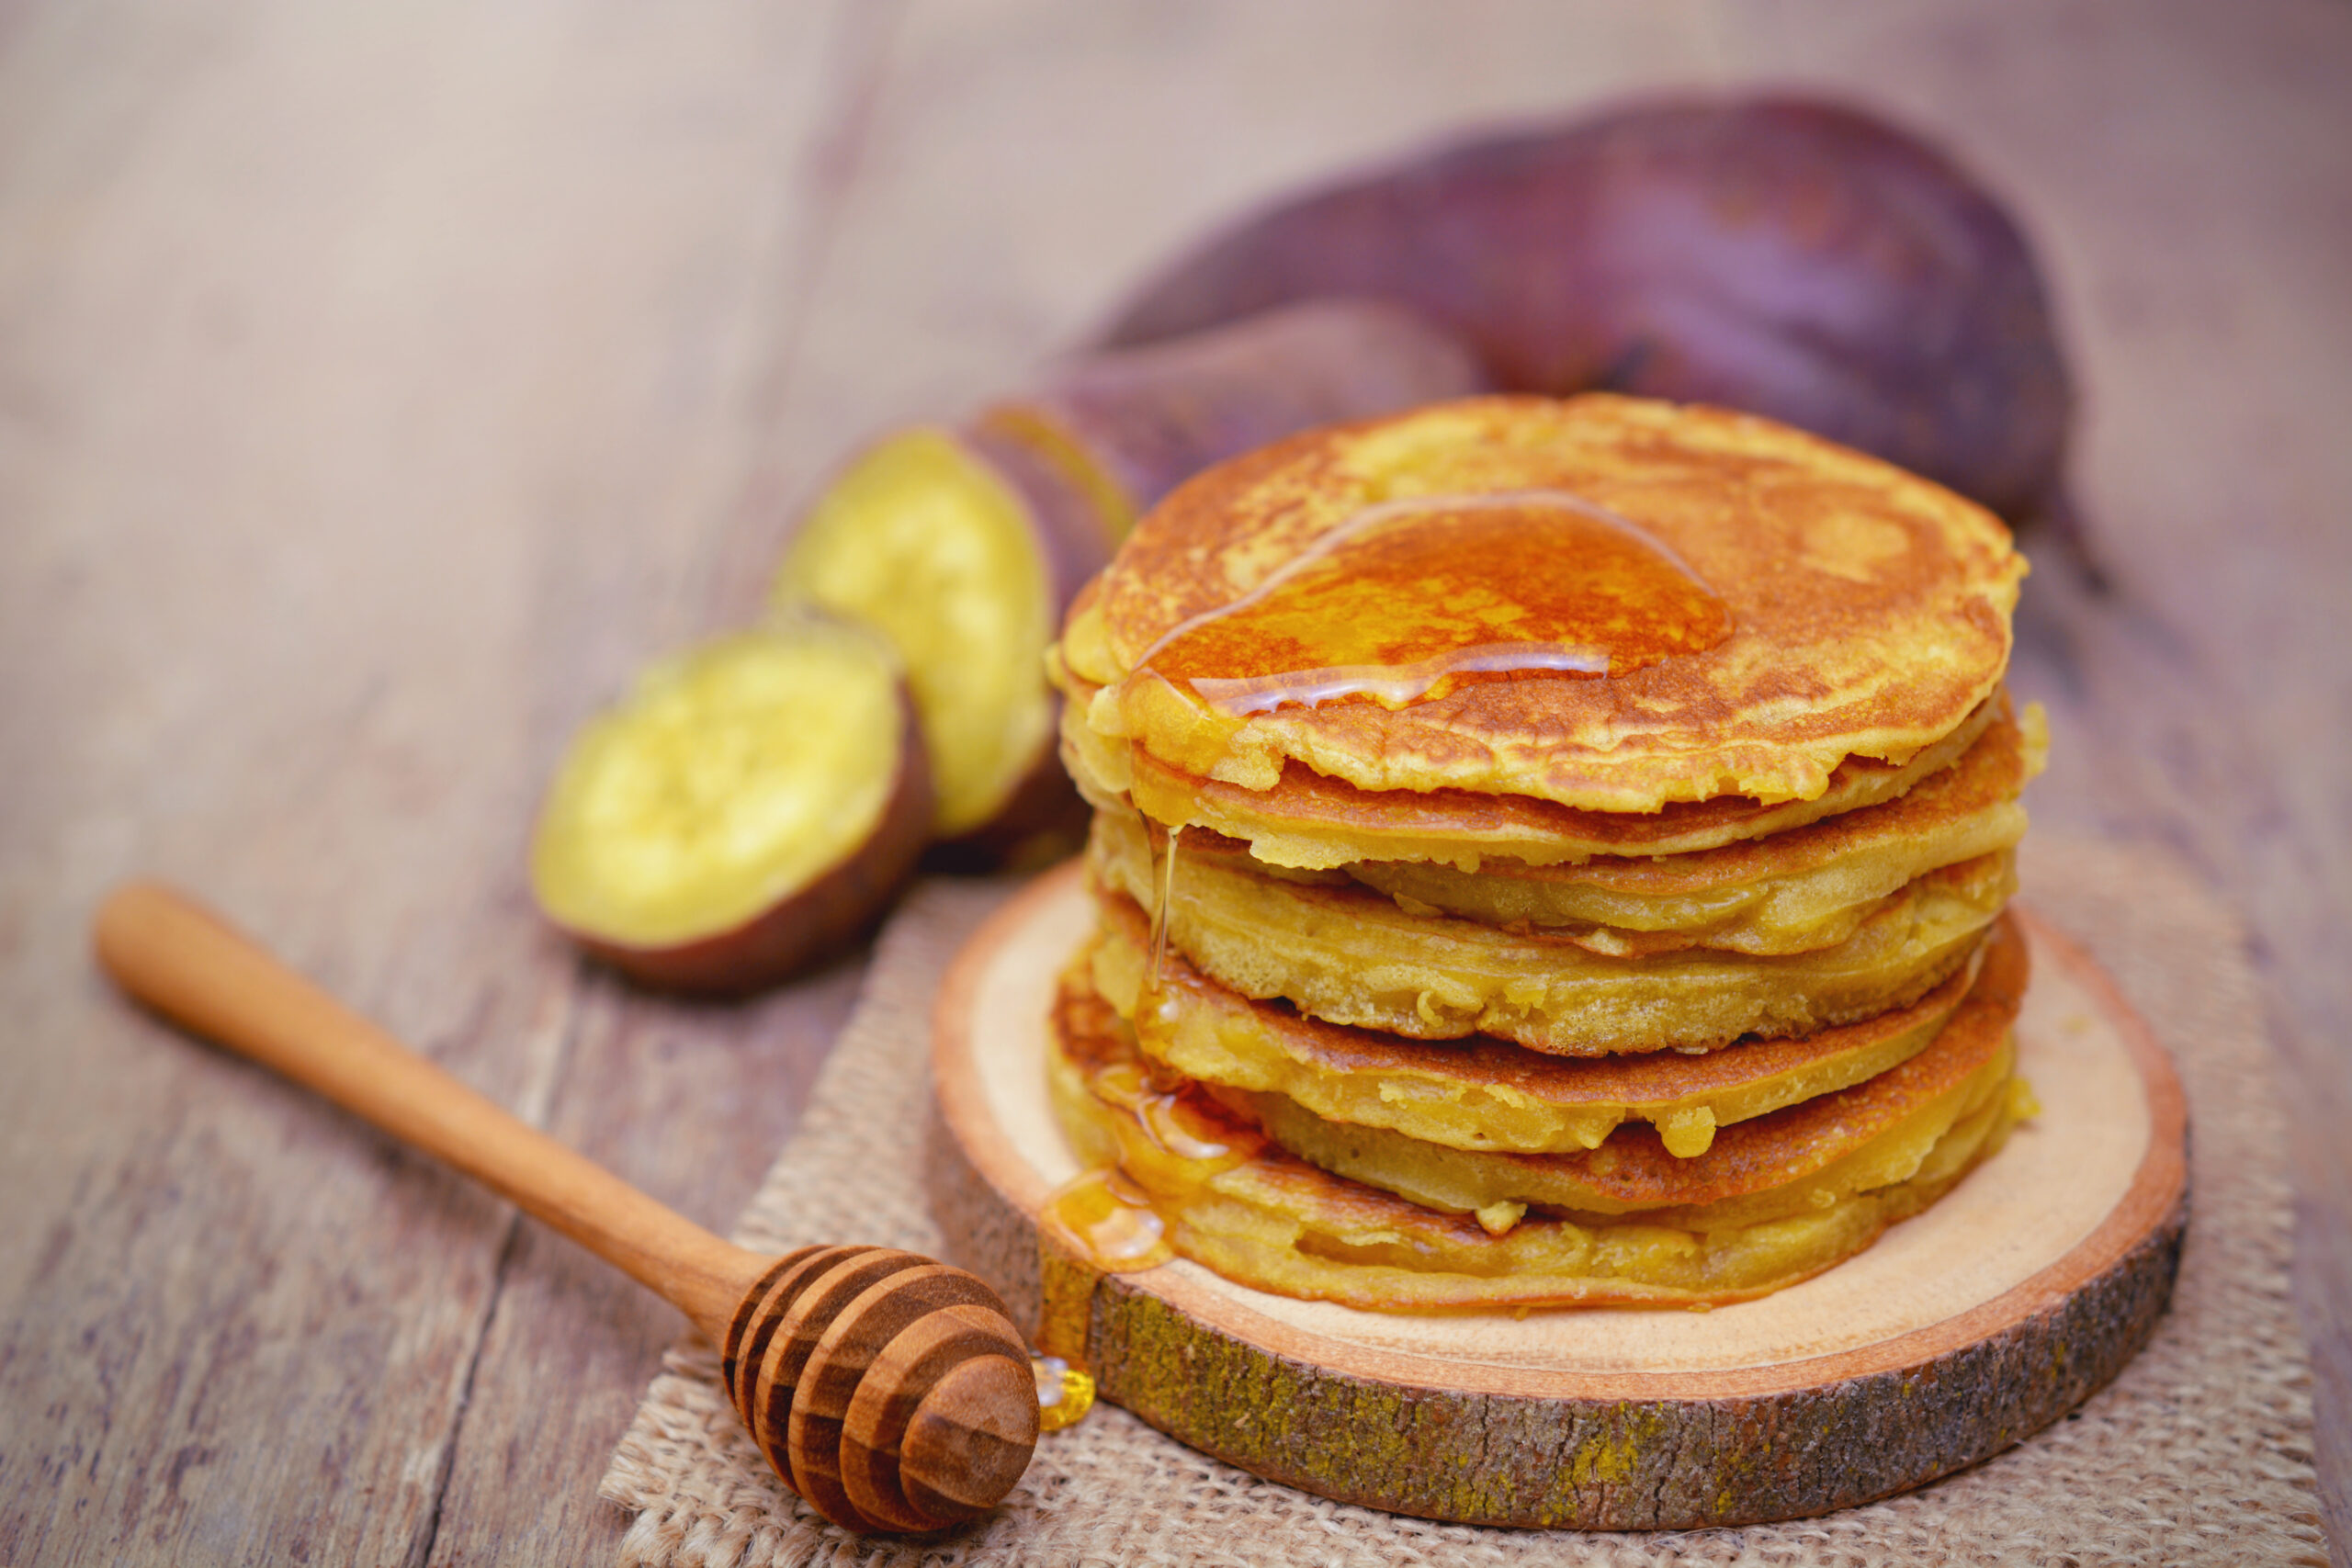 Healthy Pancake Recipes - Sweet potato and coconut flour pancakes 